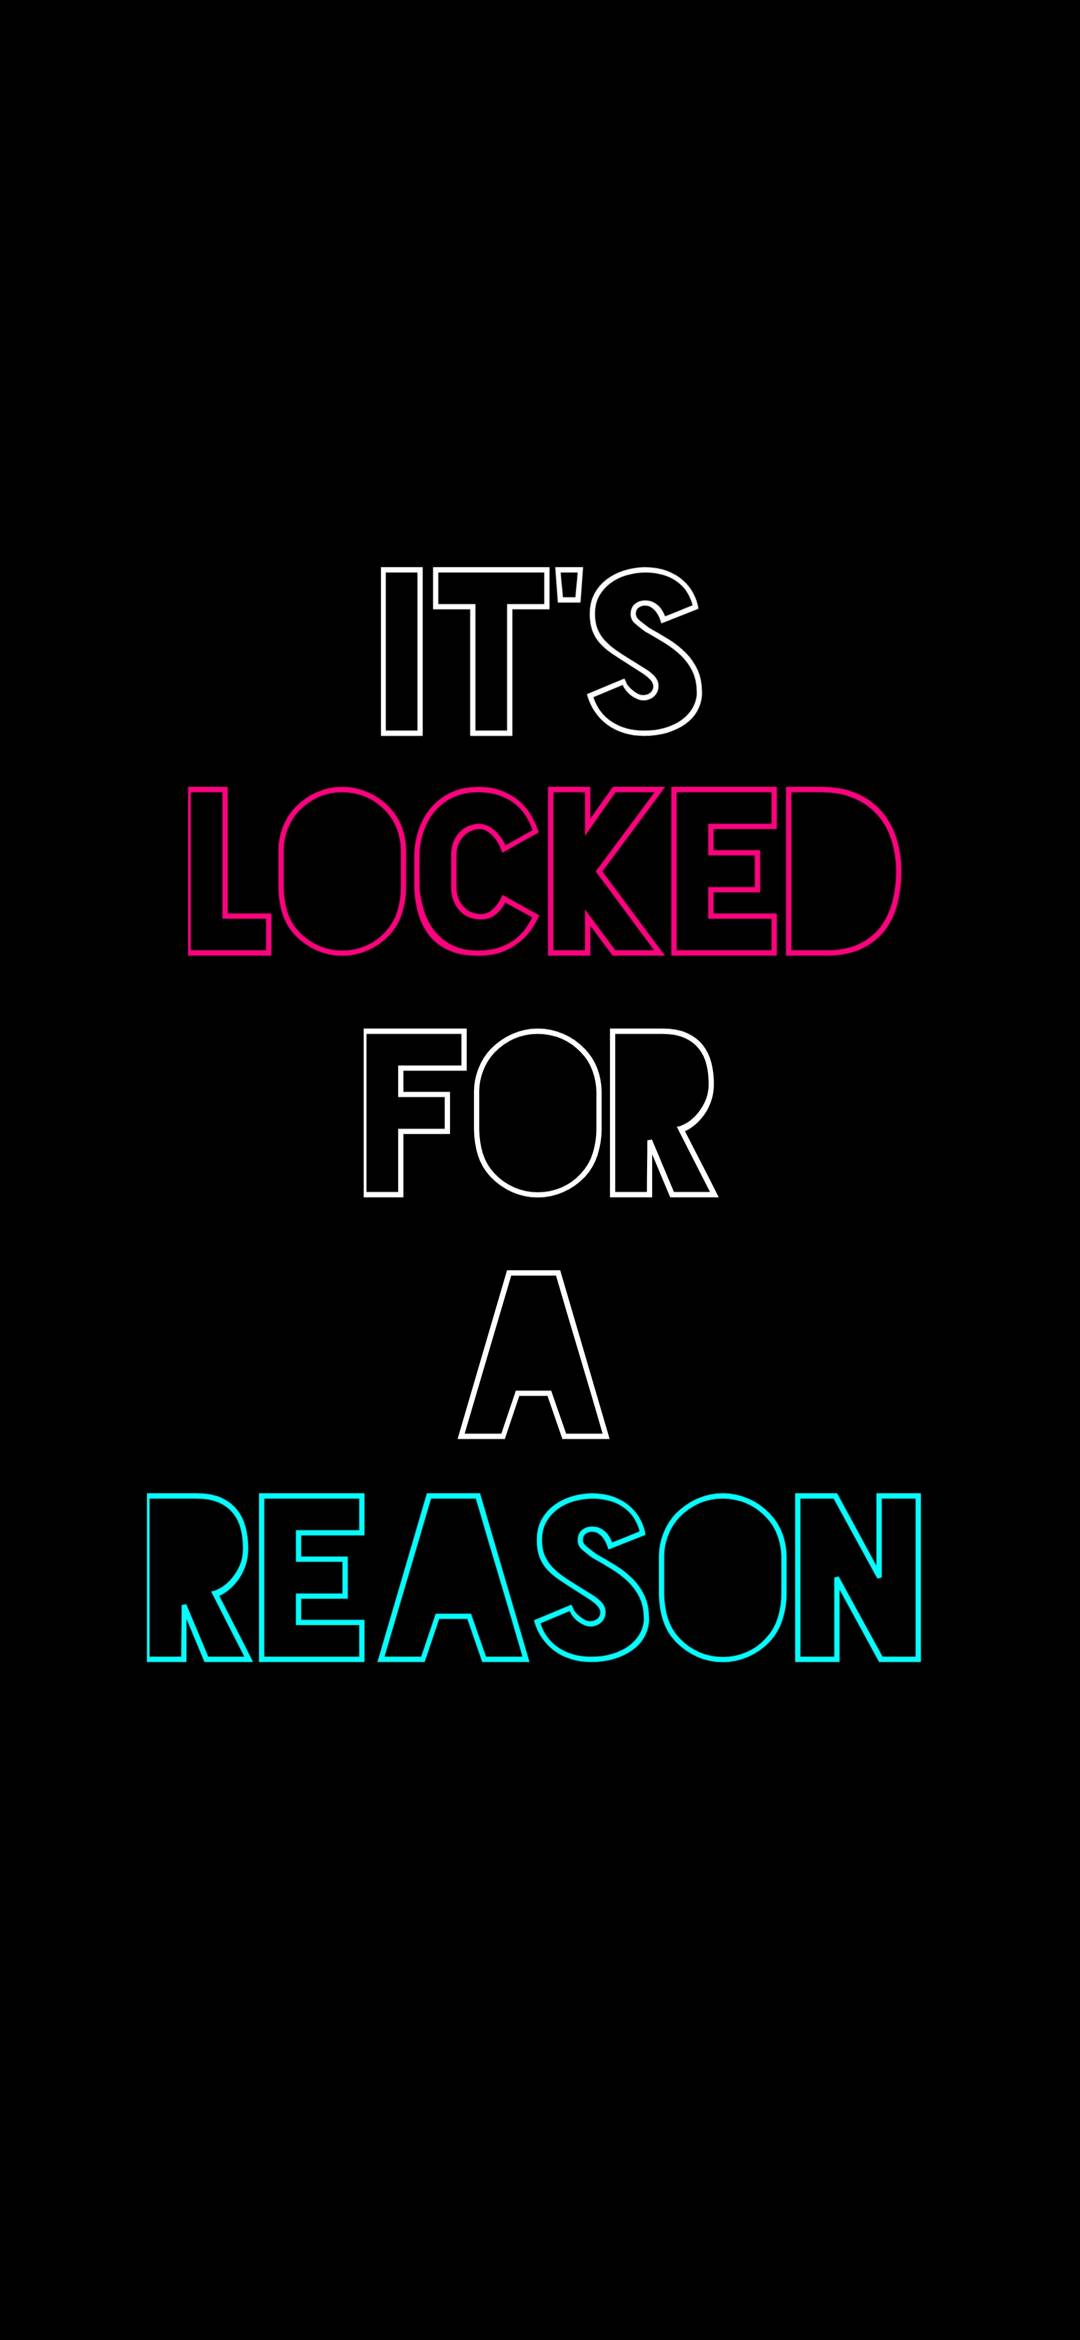 Locked for reason